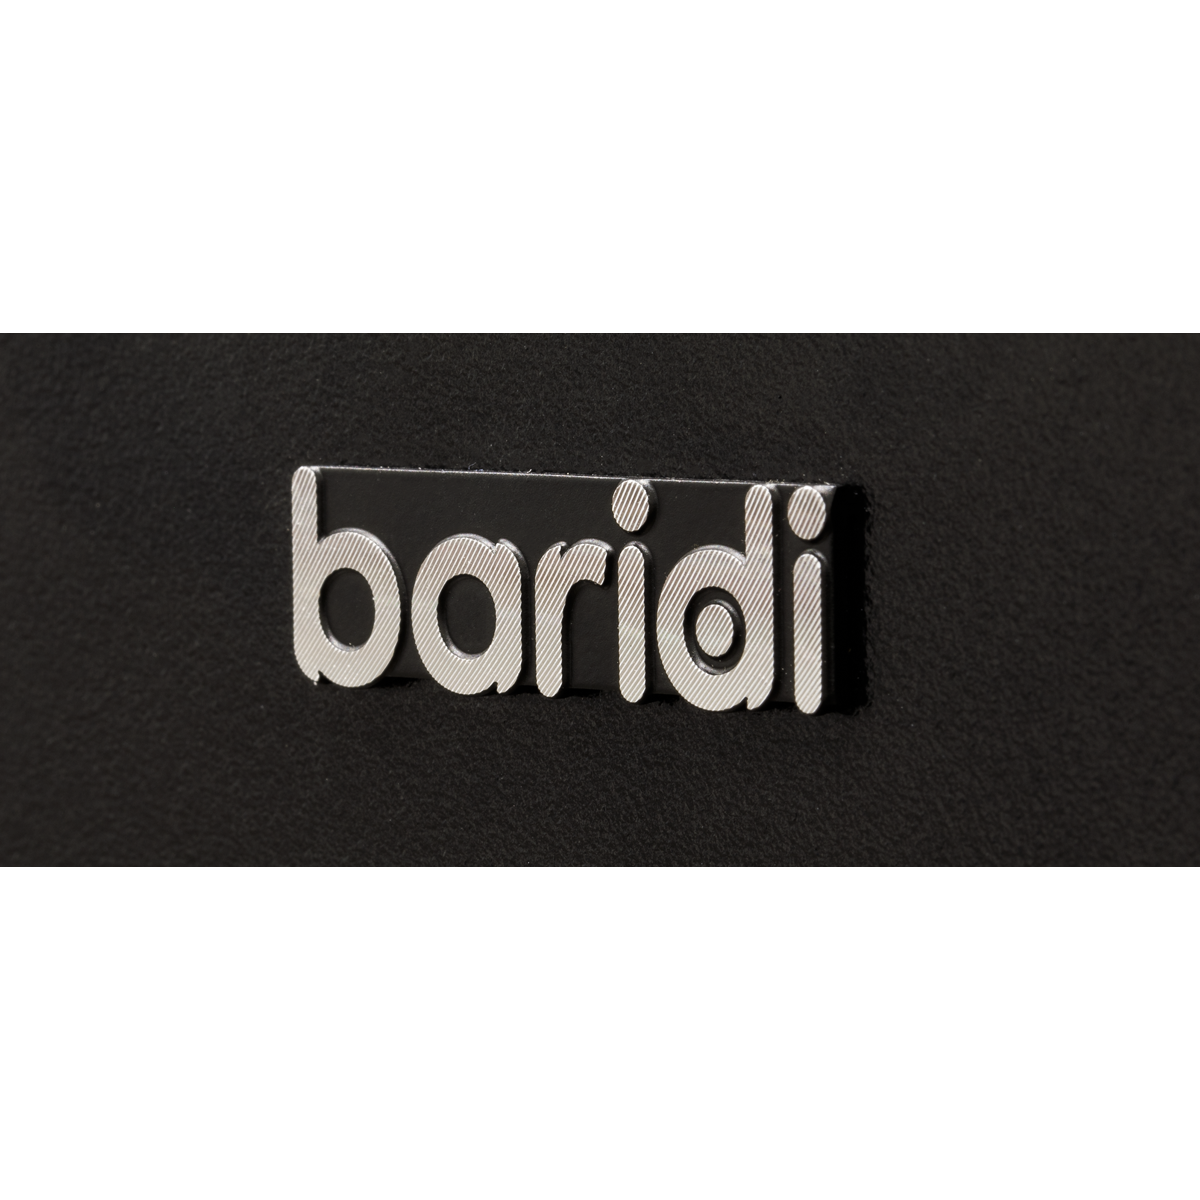 Baridi 40L Drinks Mini Fridge with LED Light, Black and Glass Door - D -  Dellonda